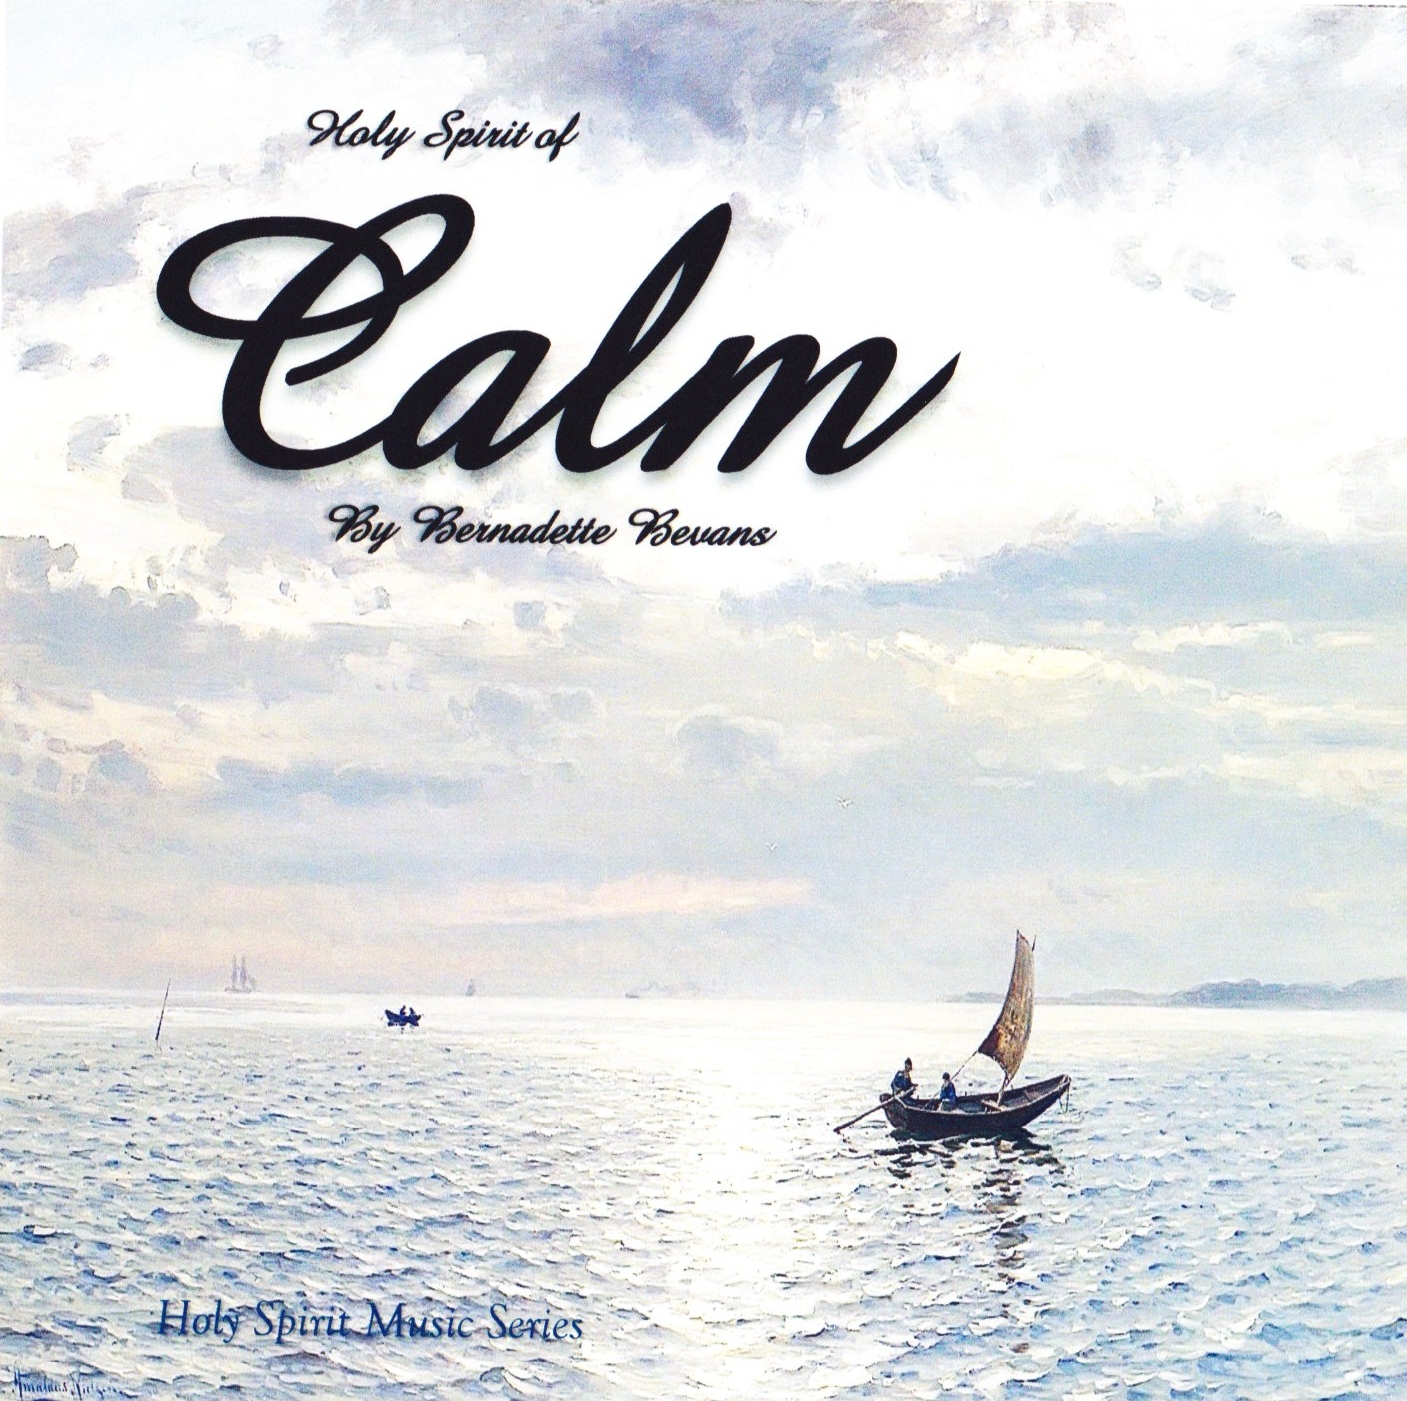 Holy Spirit of Calm CD